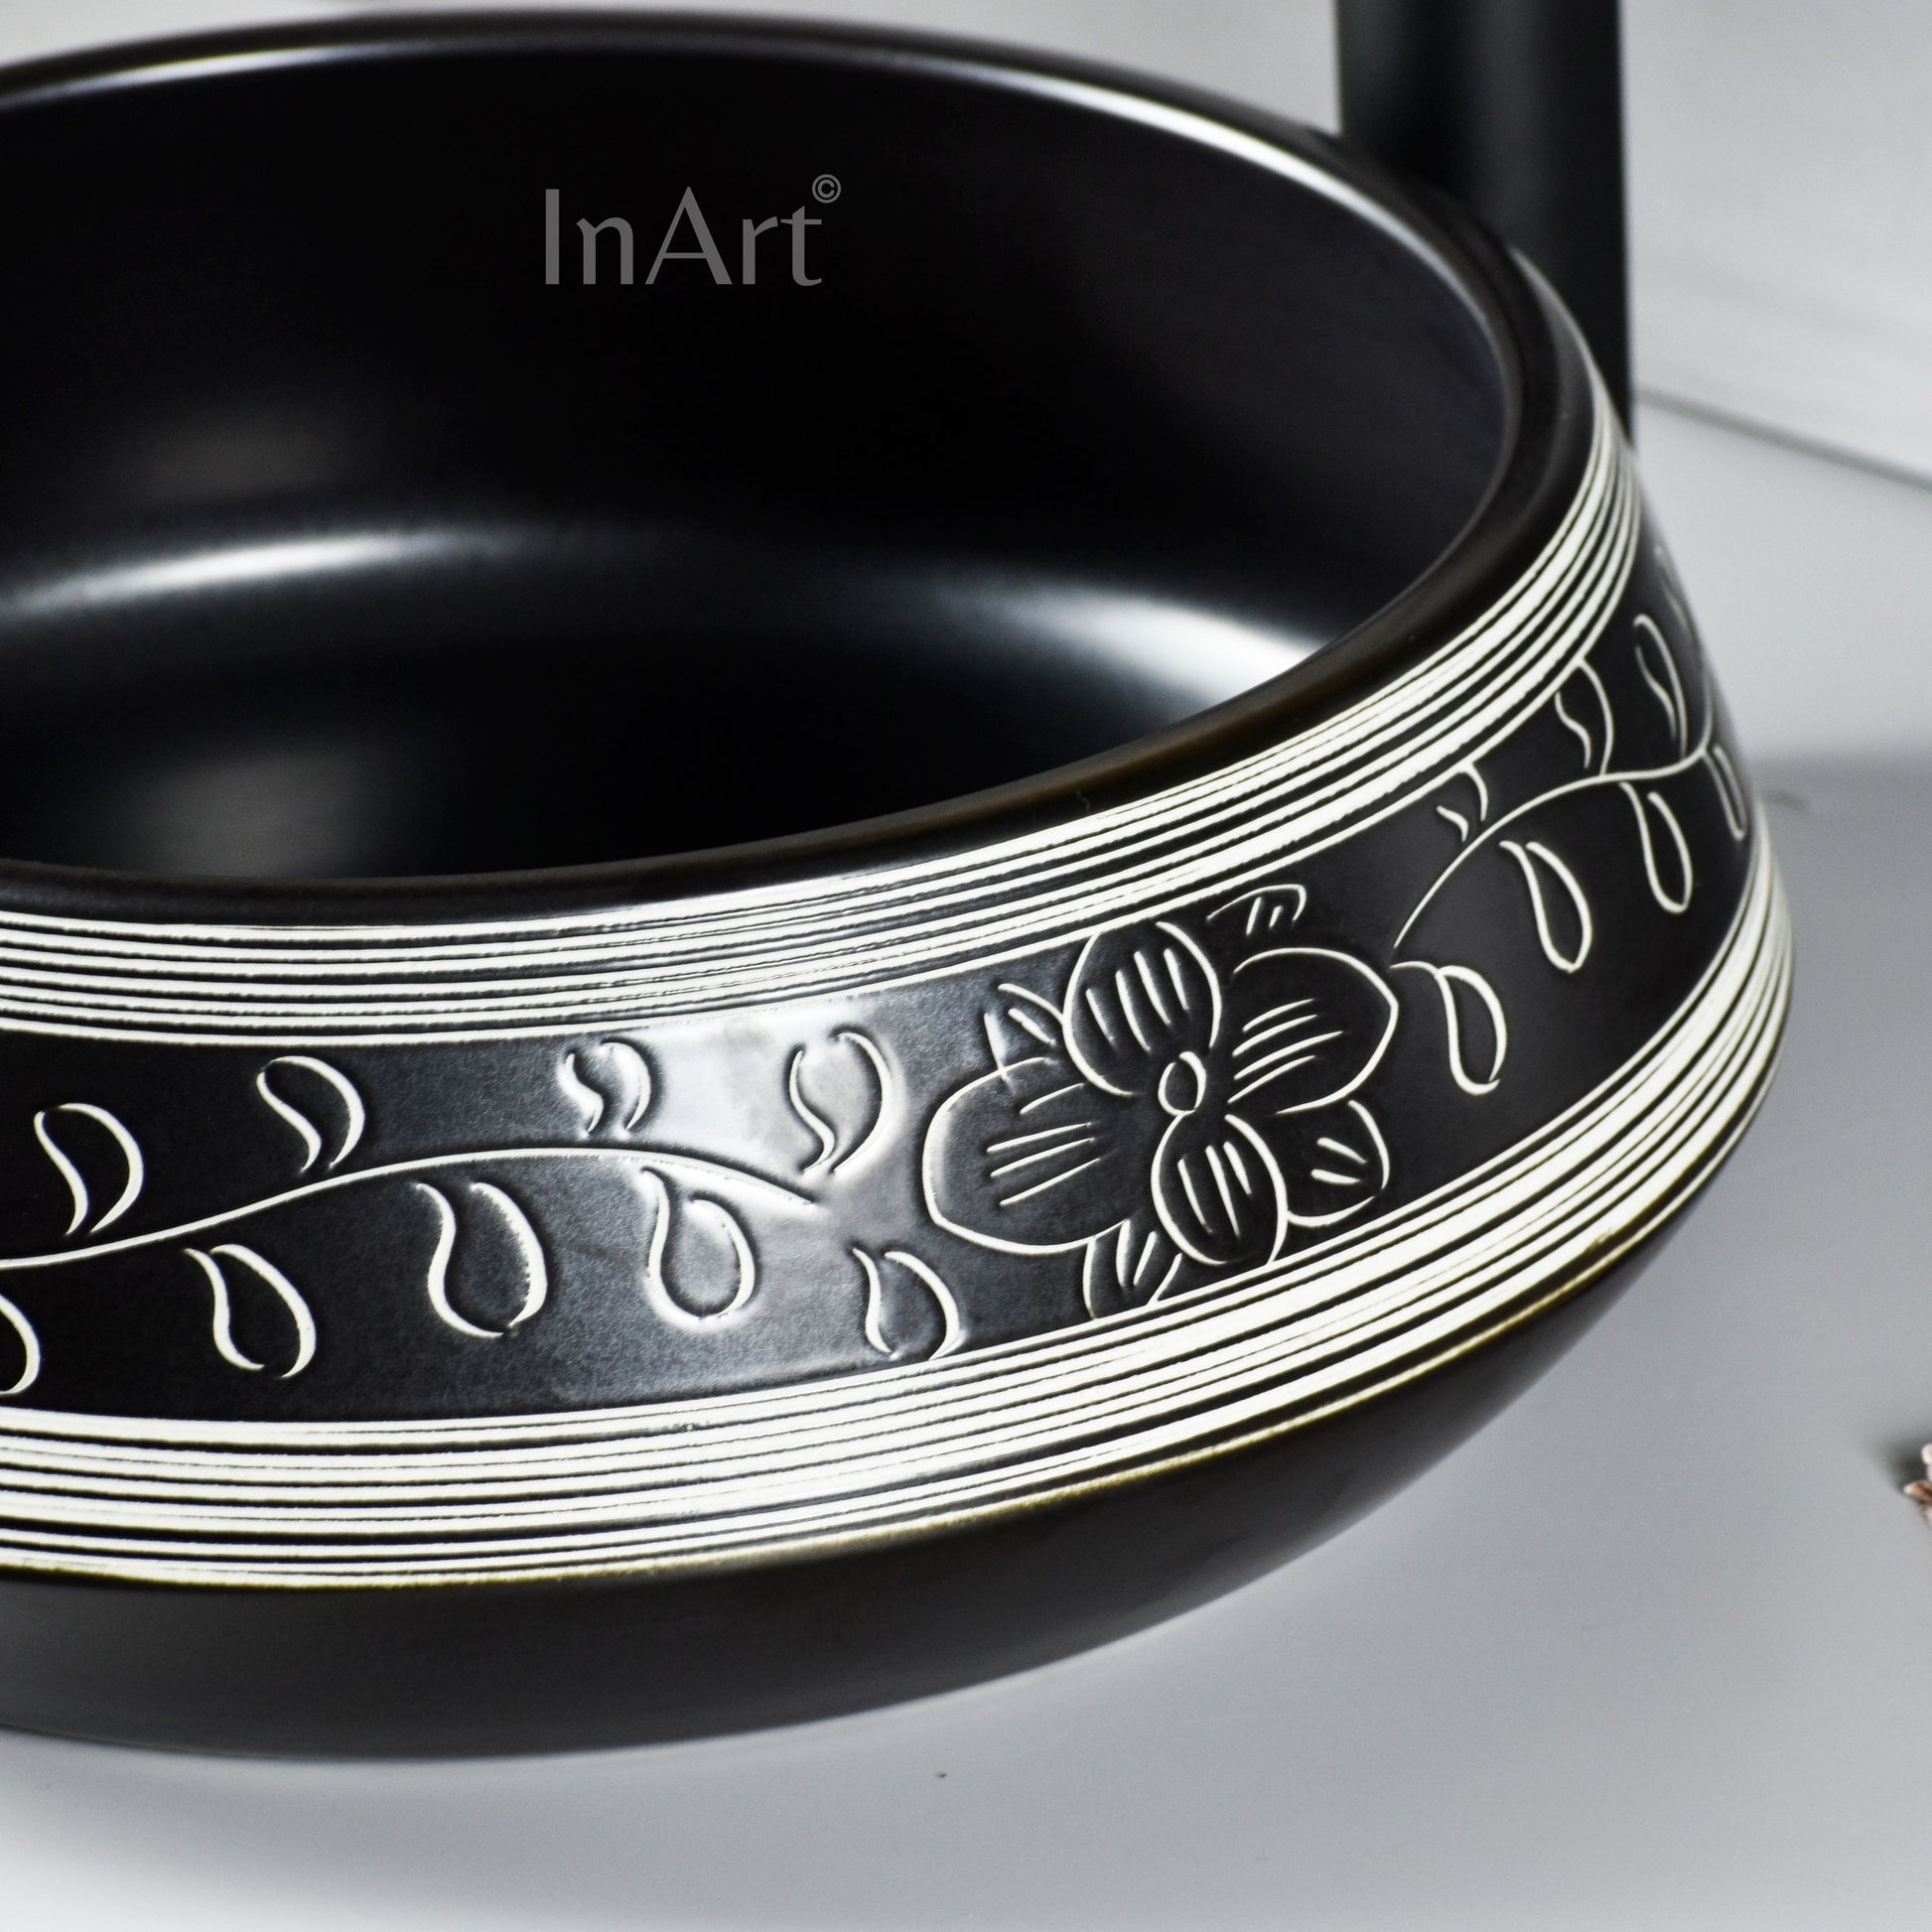 InArt Ceramic Counter or Table Top Wash Basin Black Matt Floral 42x42CM DW267 - InArt-Studio